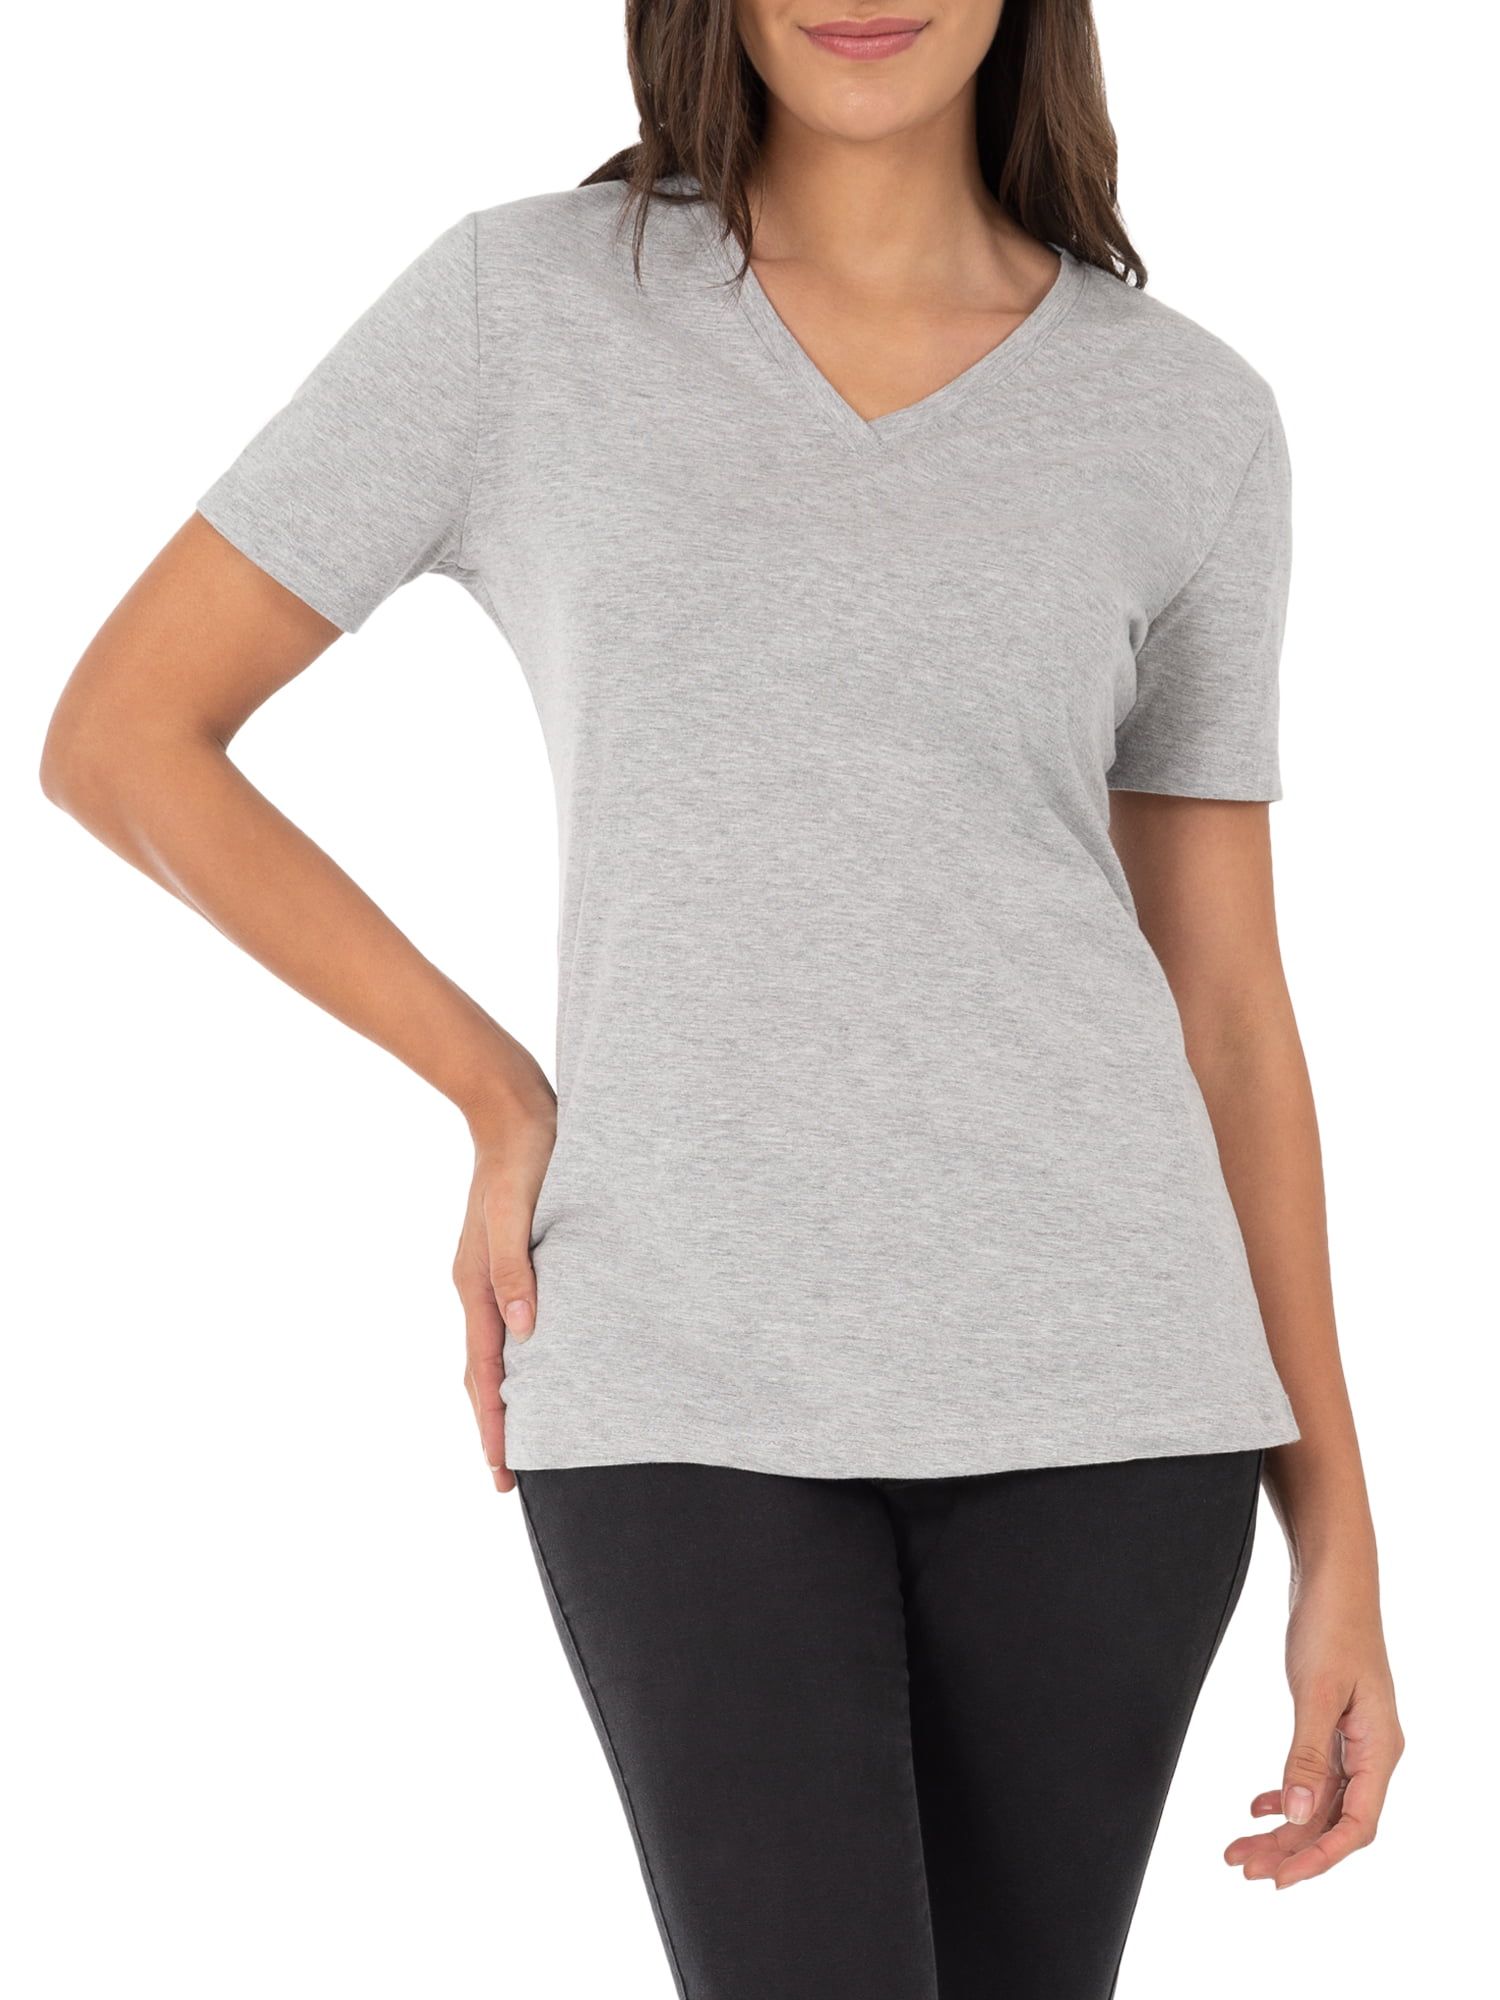 Nevera Womens Basic V Neck Short Sleeve T Shirts Summer Casual Tee Tops Plus Size